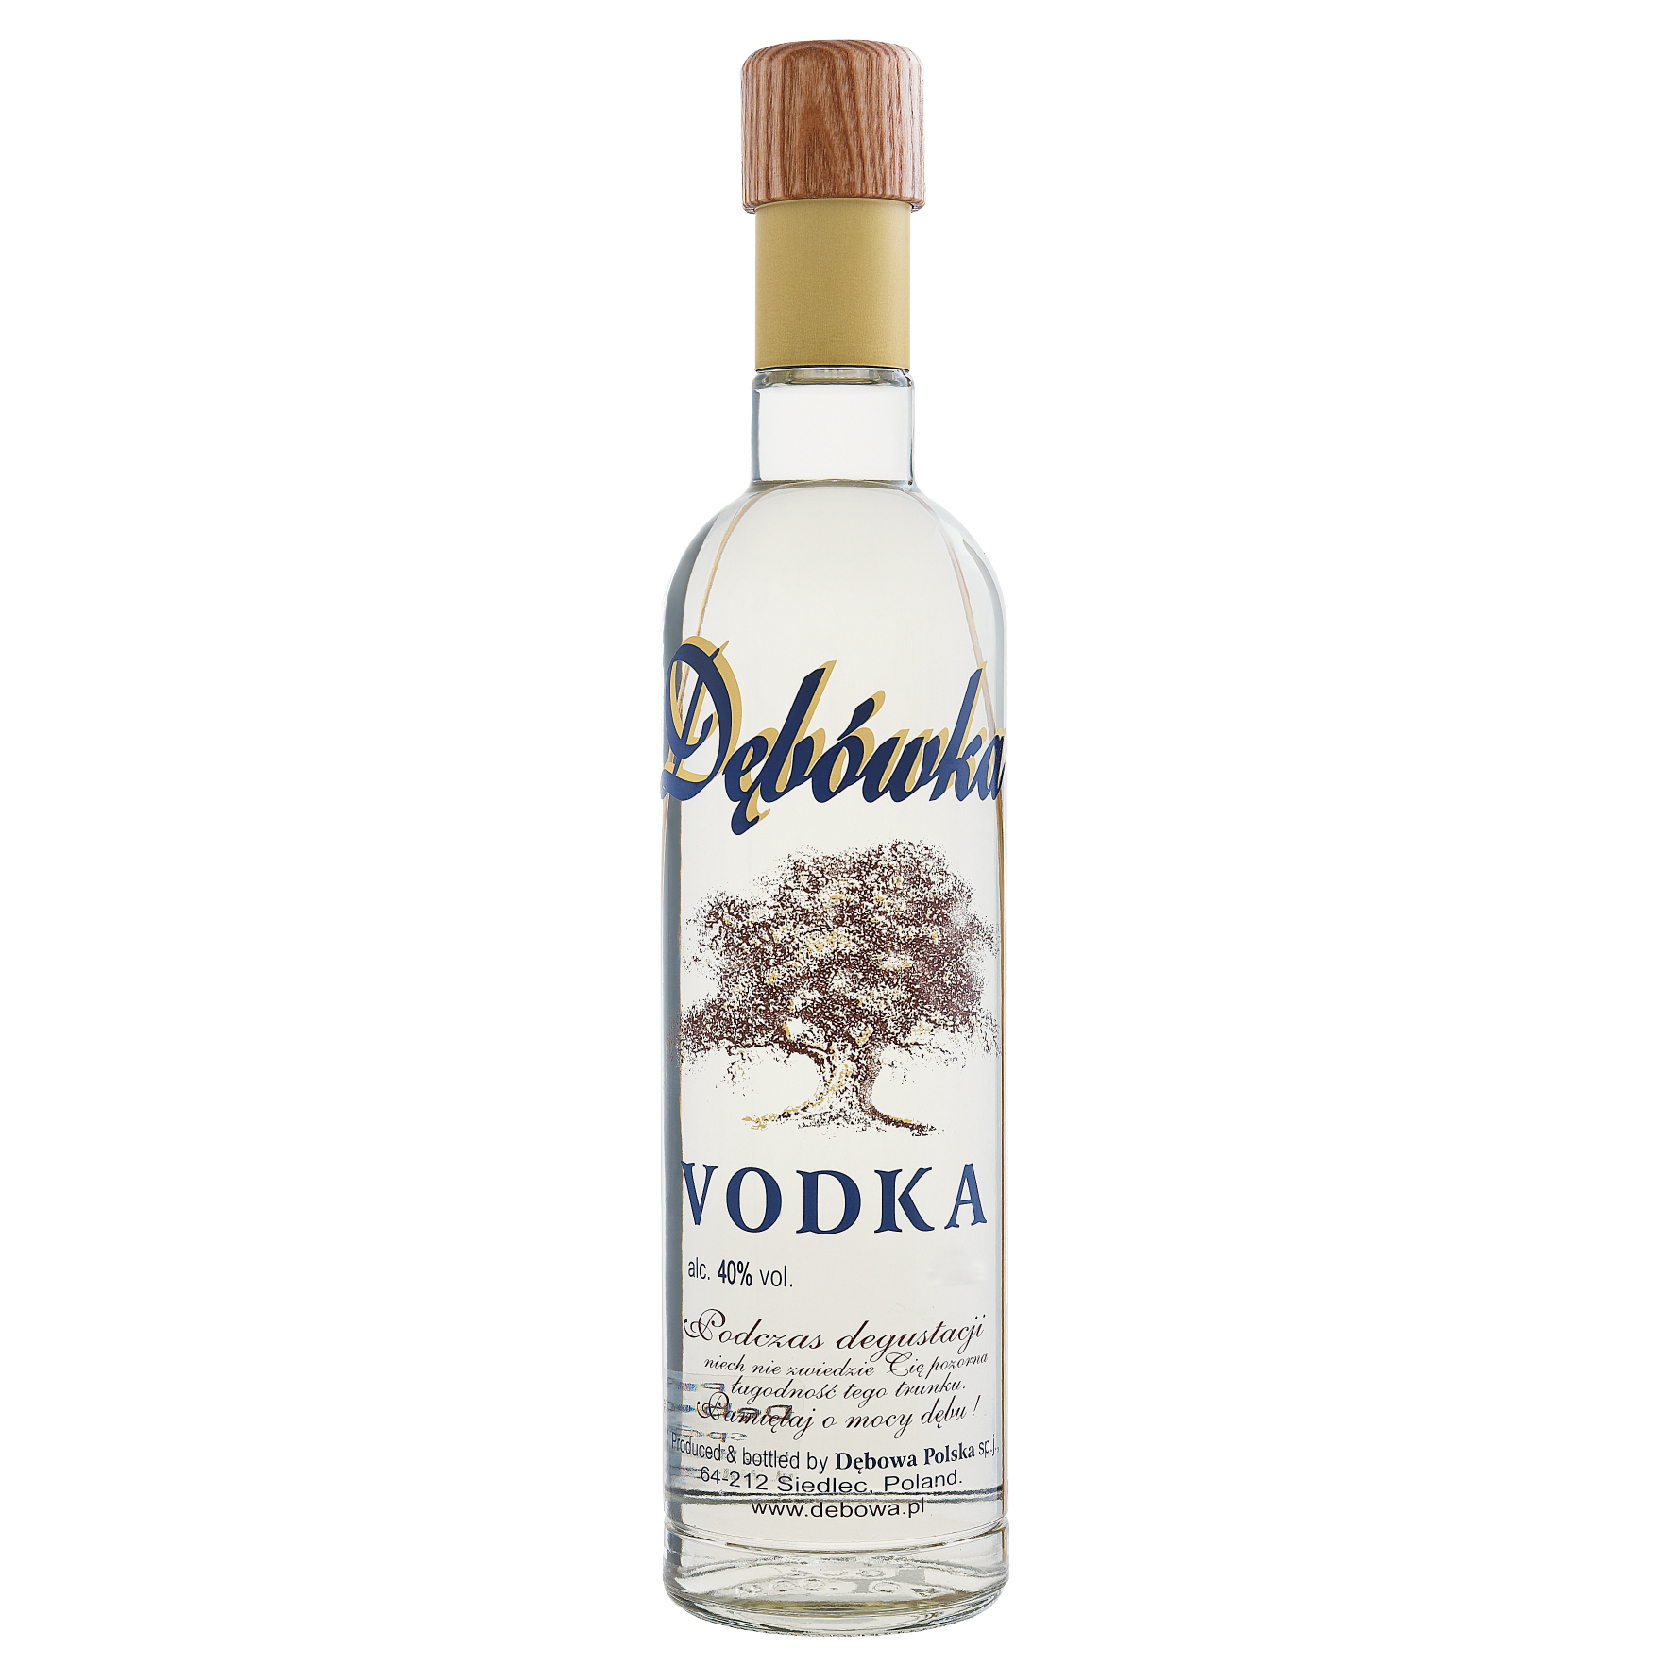 Vodka debowa (debowka) - Vodka Liqueur Polonaise